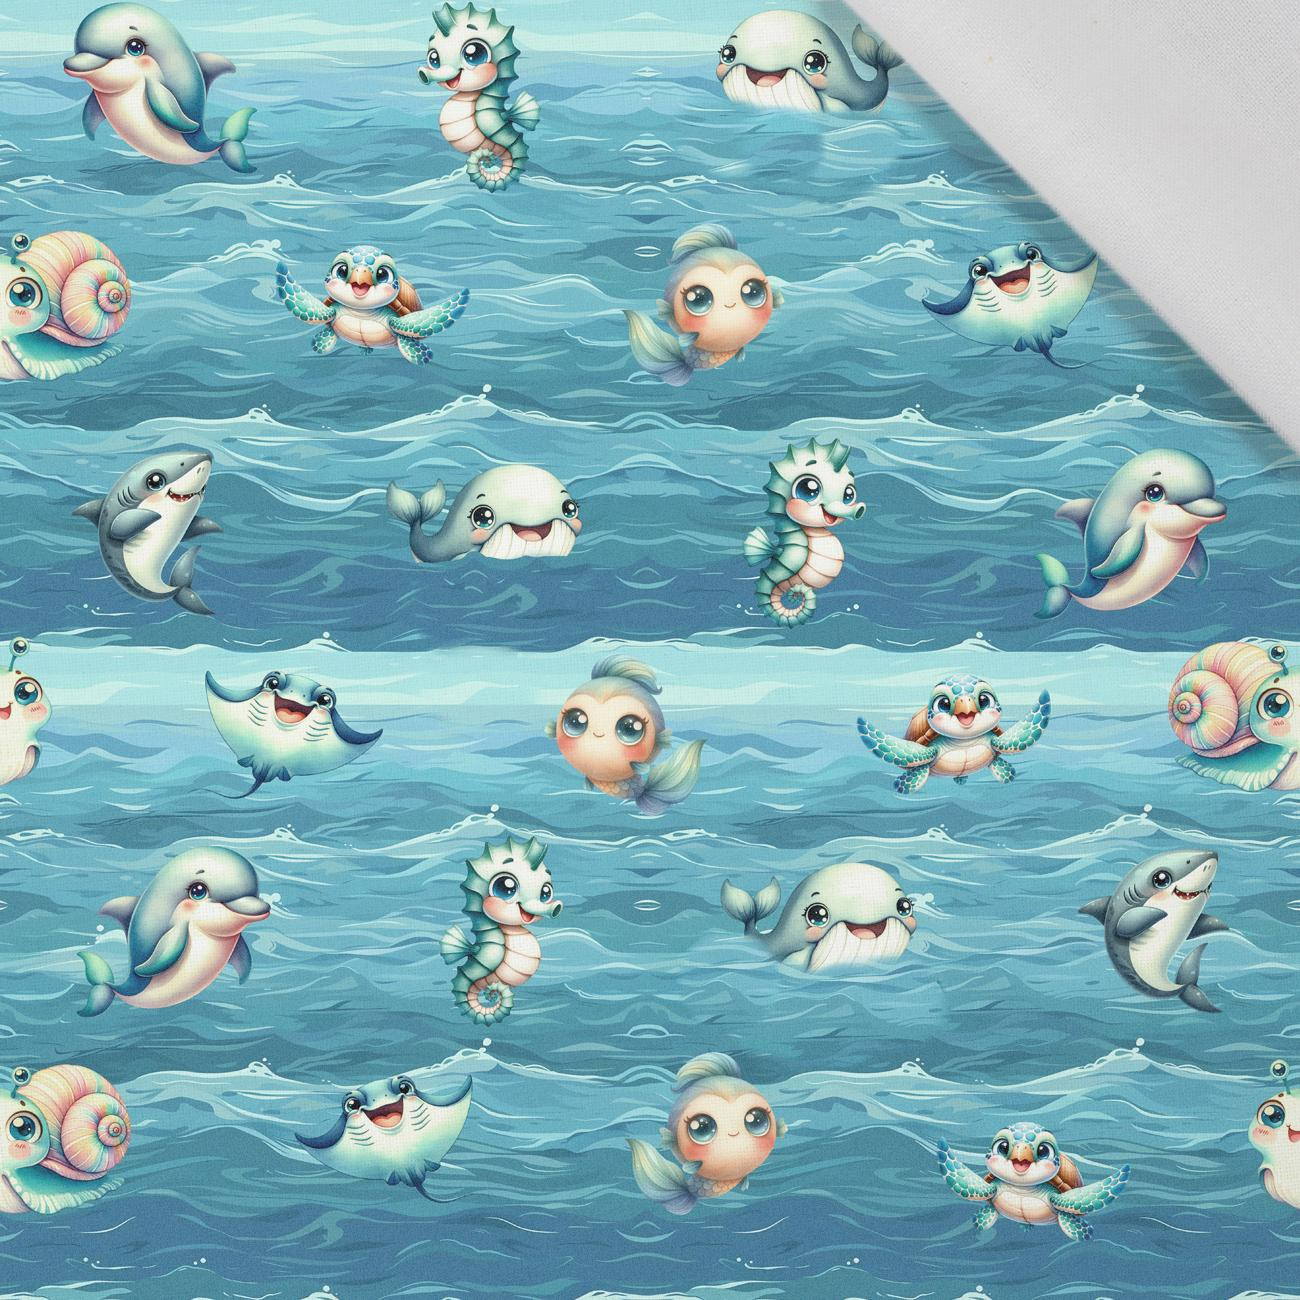 SEA ANIMALS PAT. 1 - Cotton woven fabric